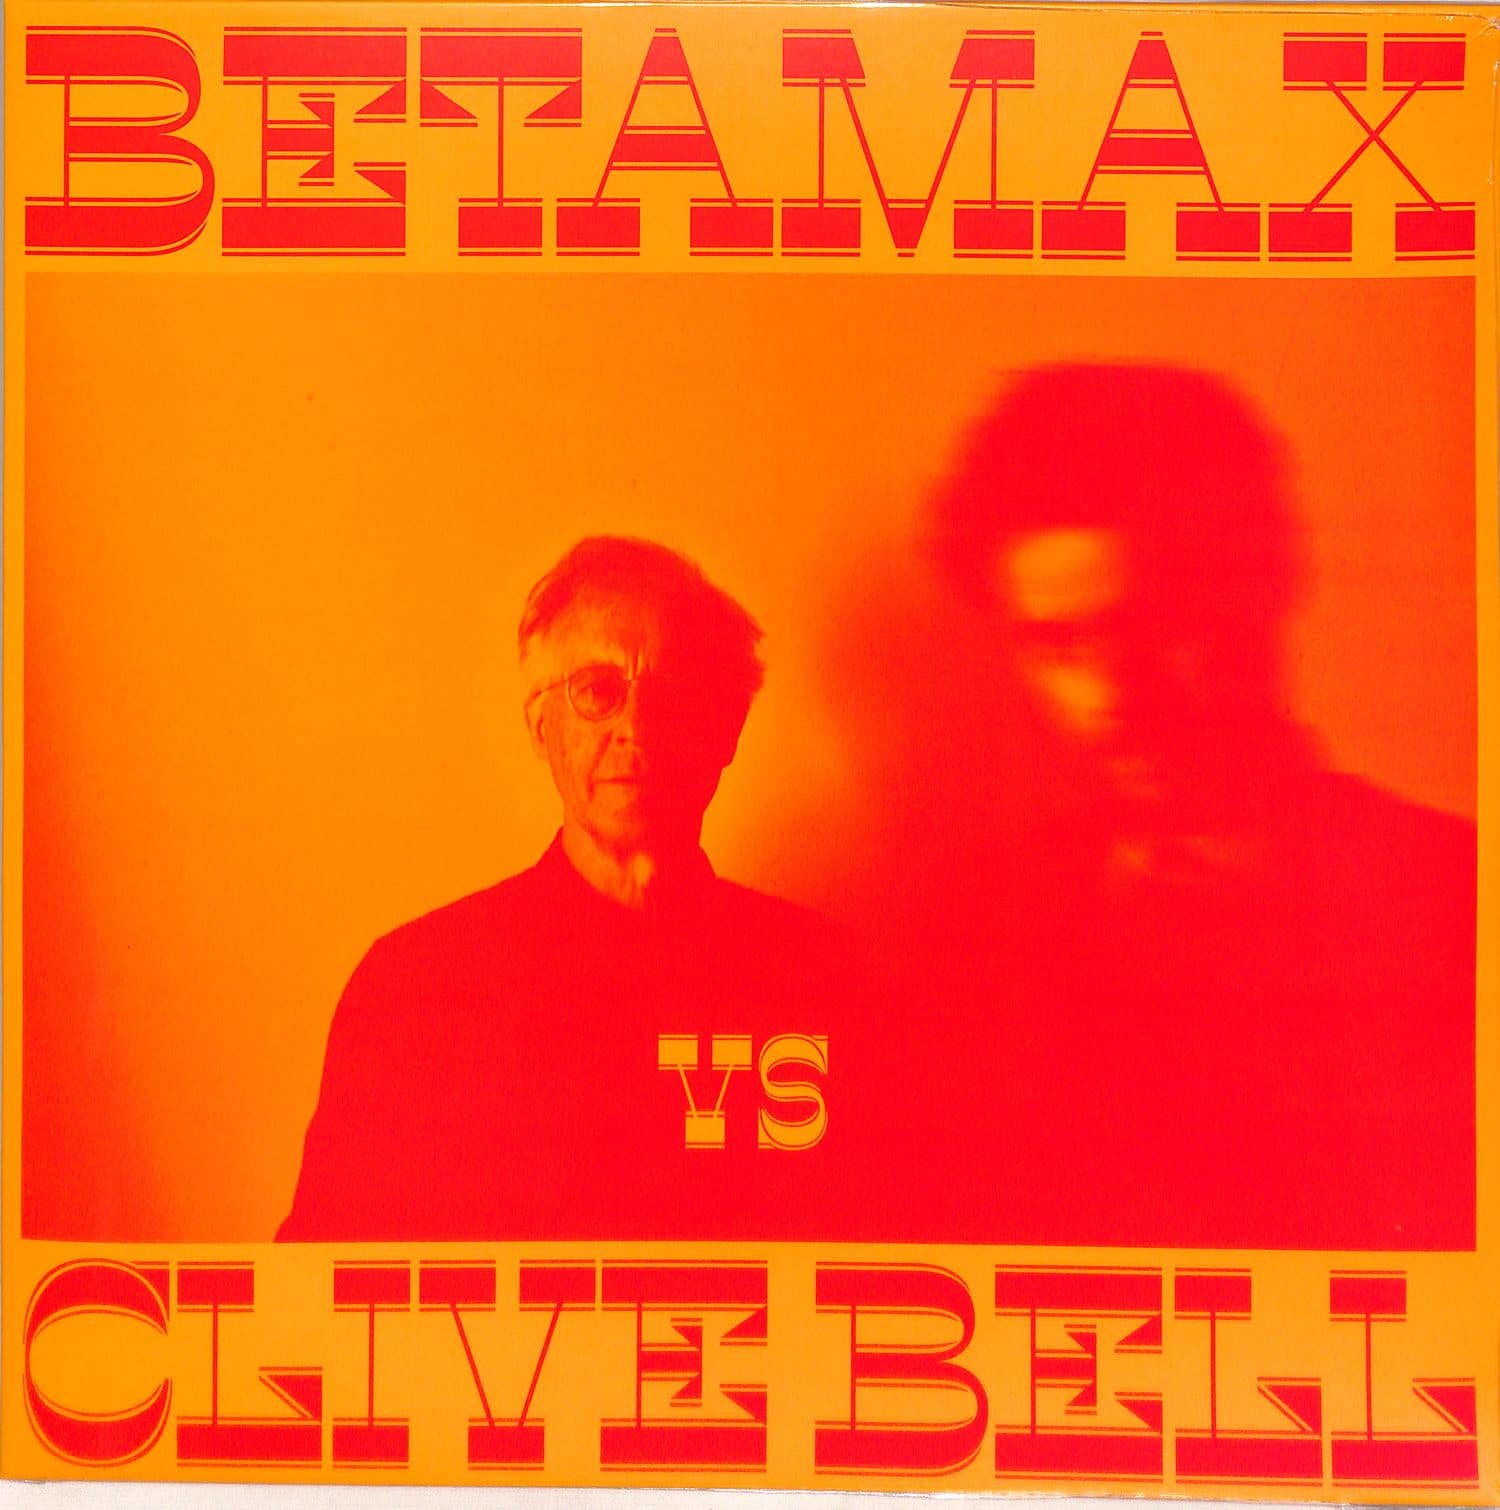 Betamax / Clive Bell - BETAMAX VS CLIVE BELL 